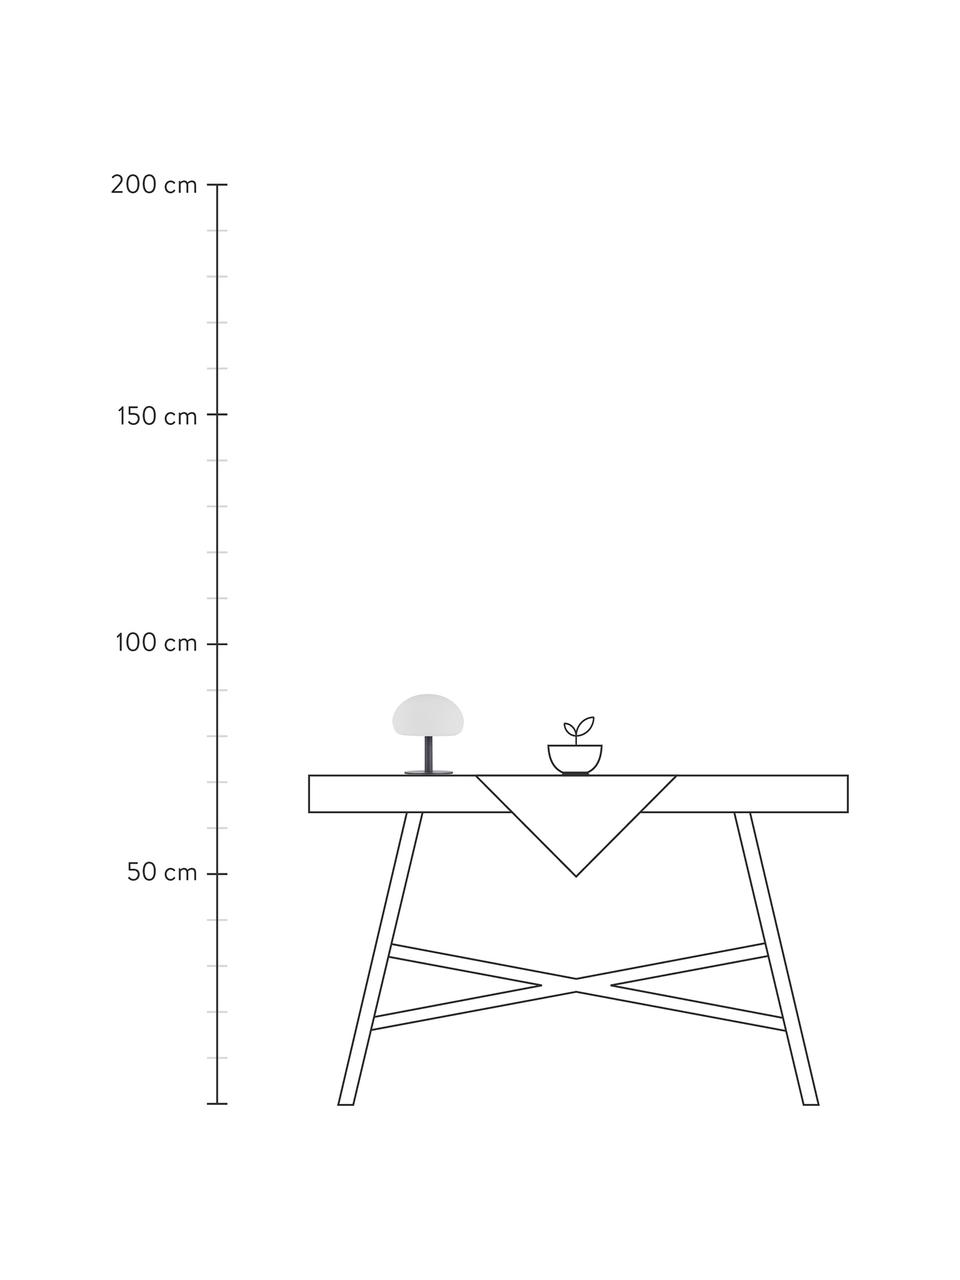 Lámpara de mesa para exterior regulable Sponge, portátil, Pantalla: plástico, Blanco, negro, Ø 20 x Al 22 cm